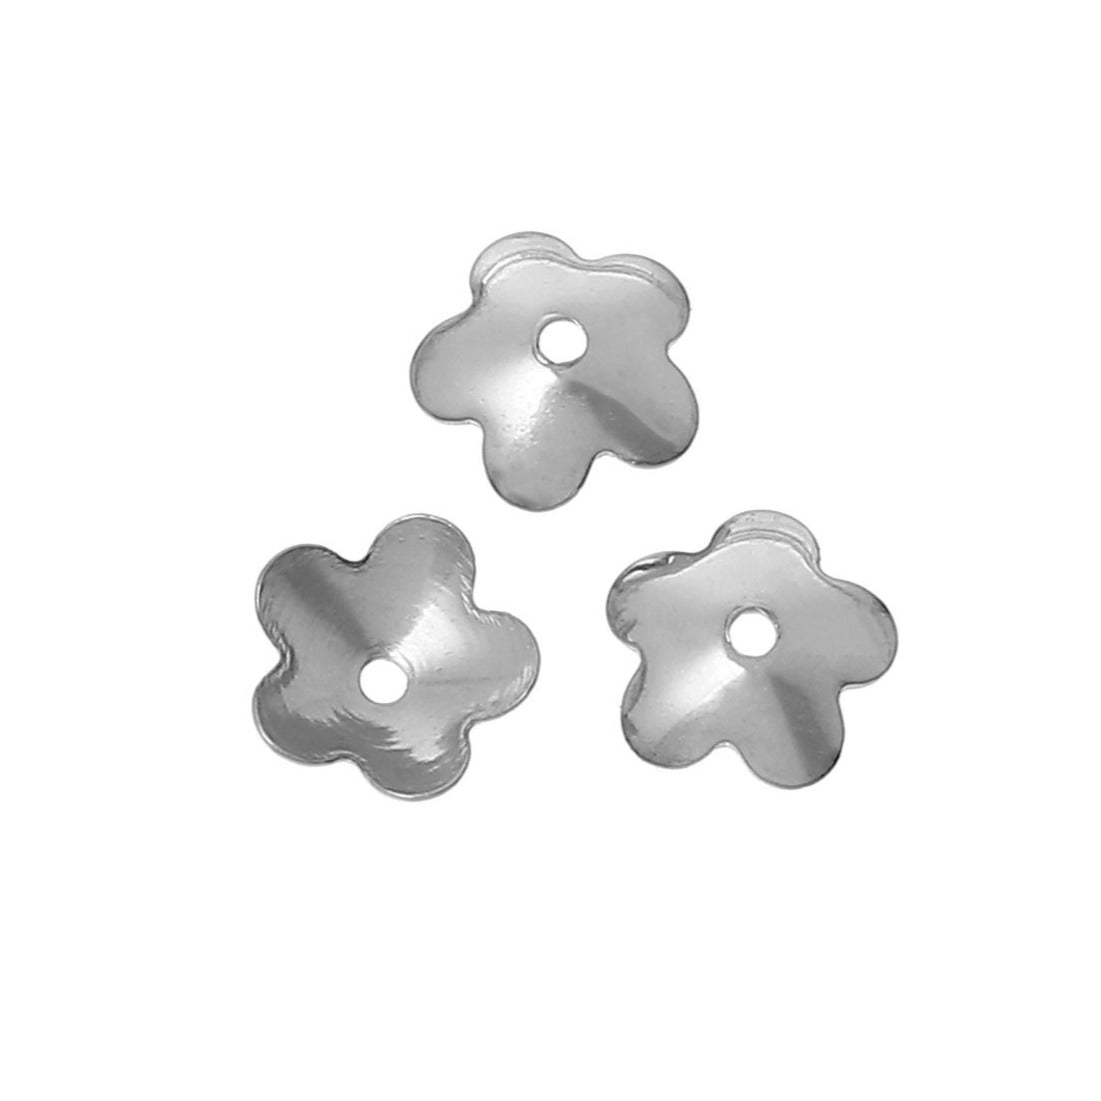 10 Flower bead caps hypoallergenic stainless steel 6mm beadcaps